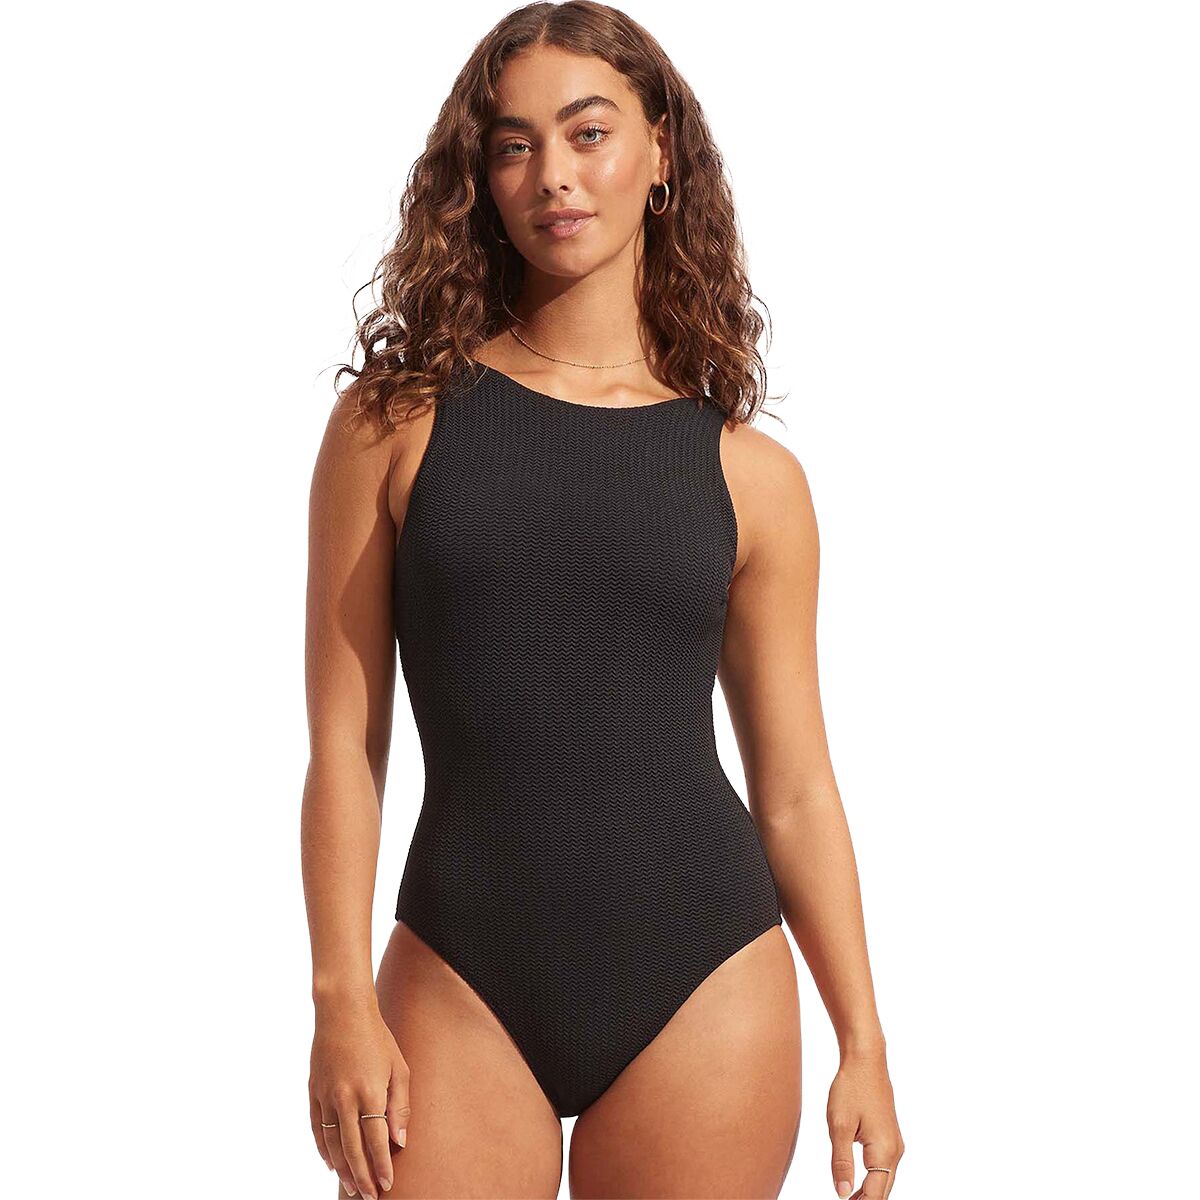 Seadive High Neck Maillot One-Piece Swim Suit - Women